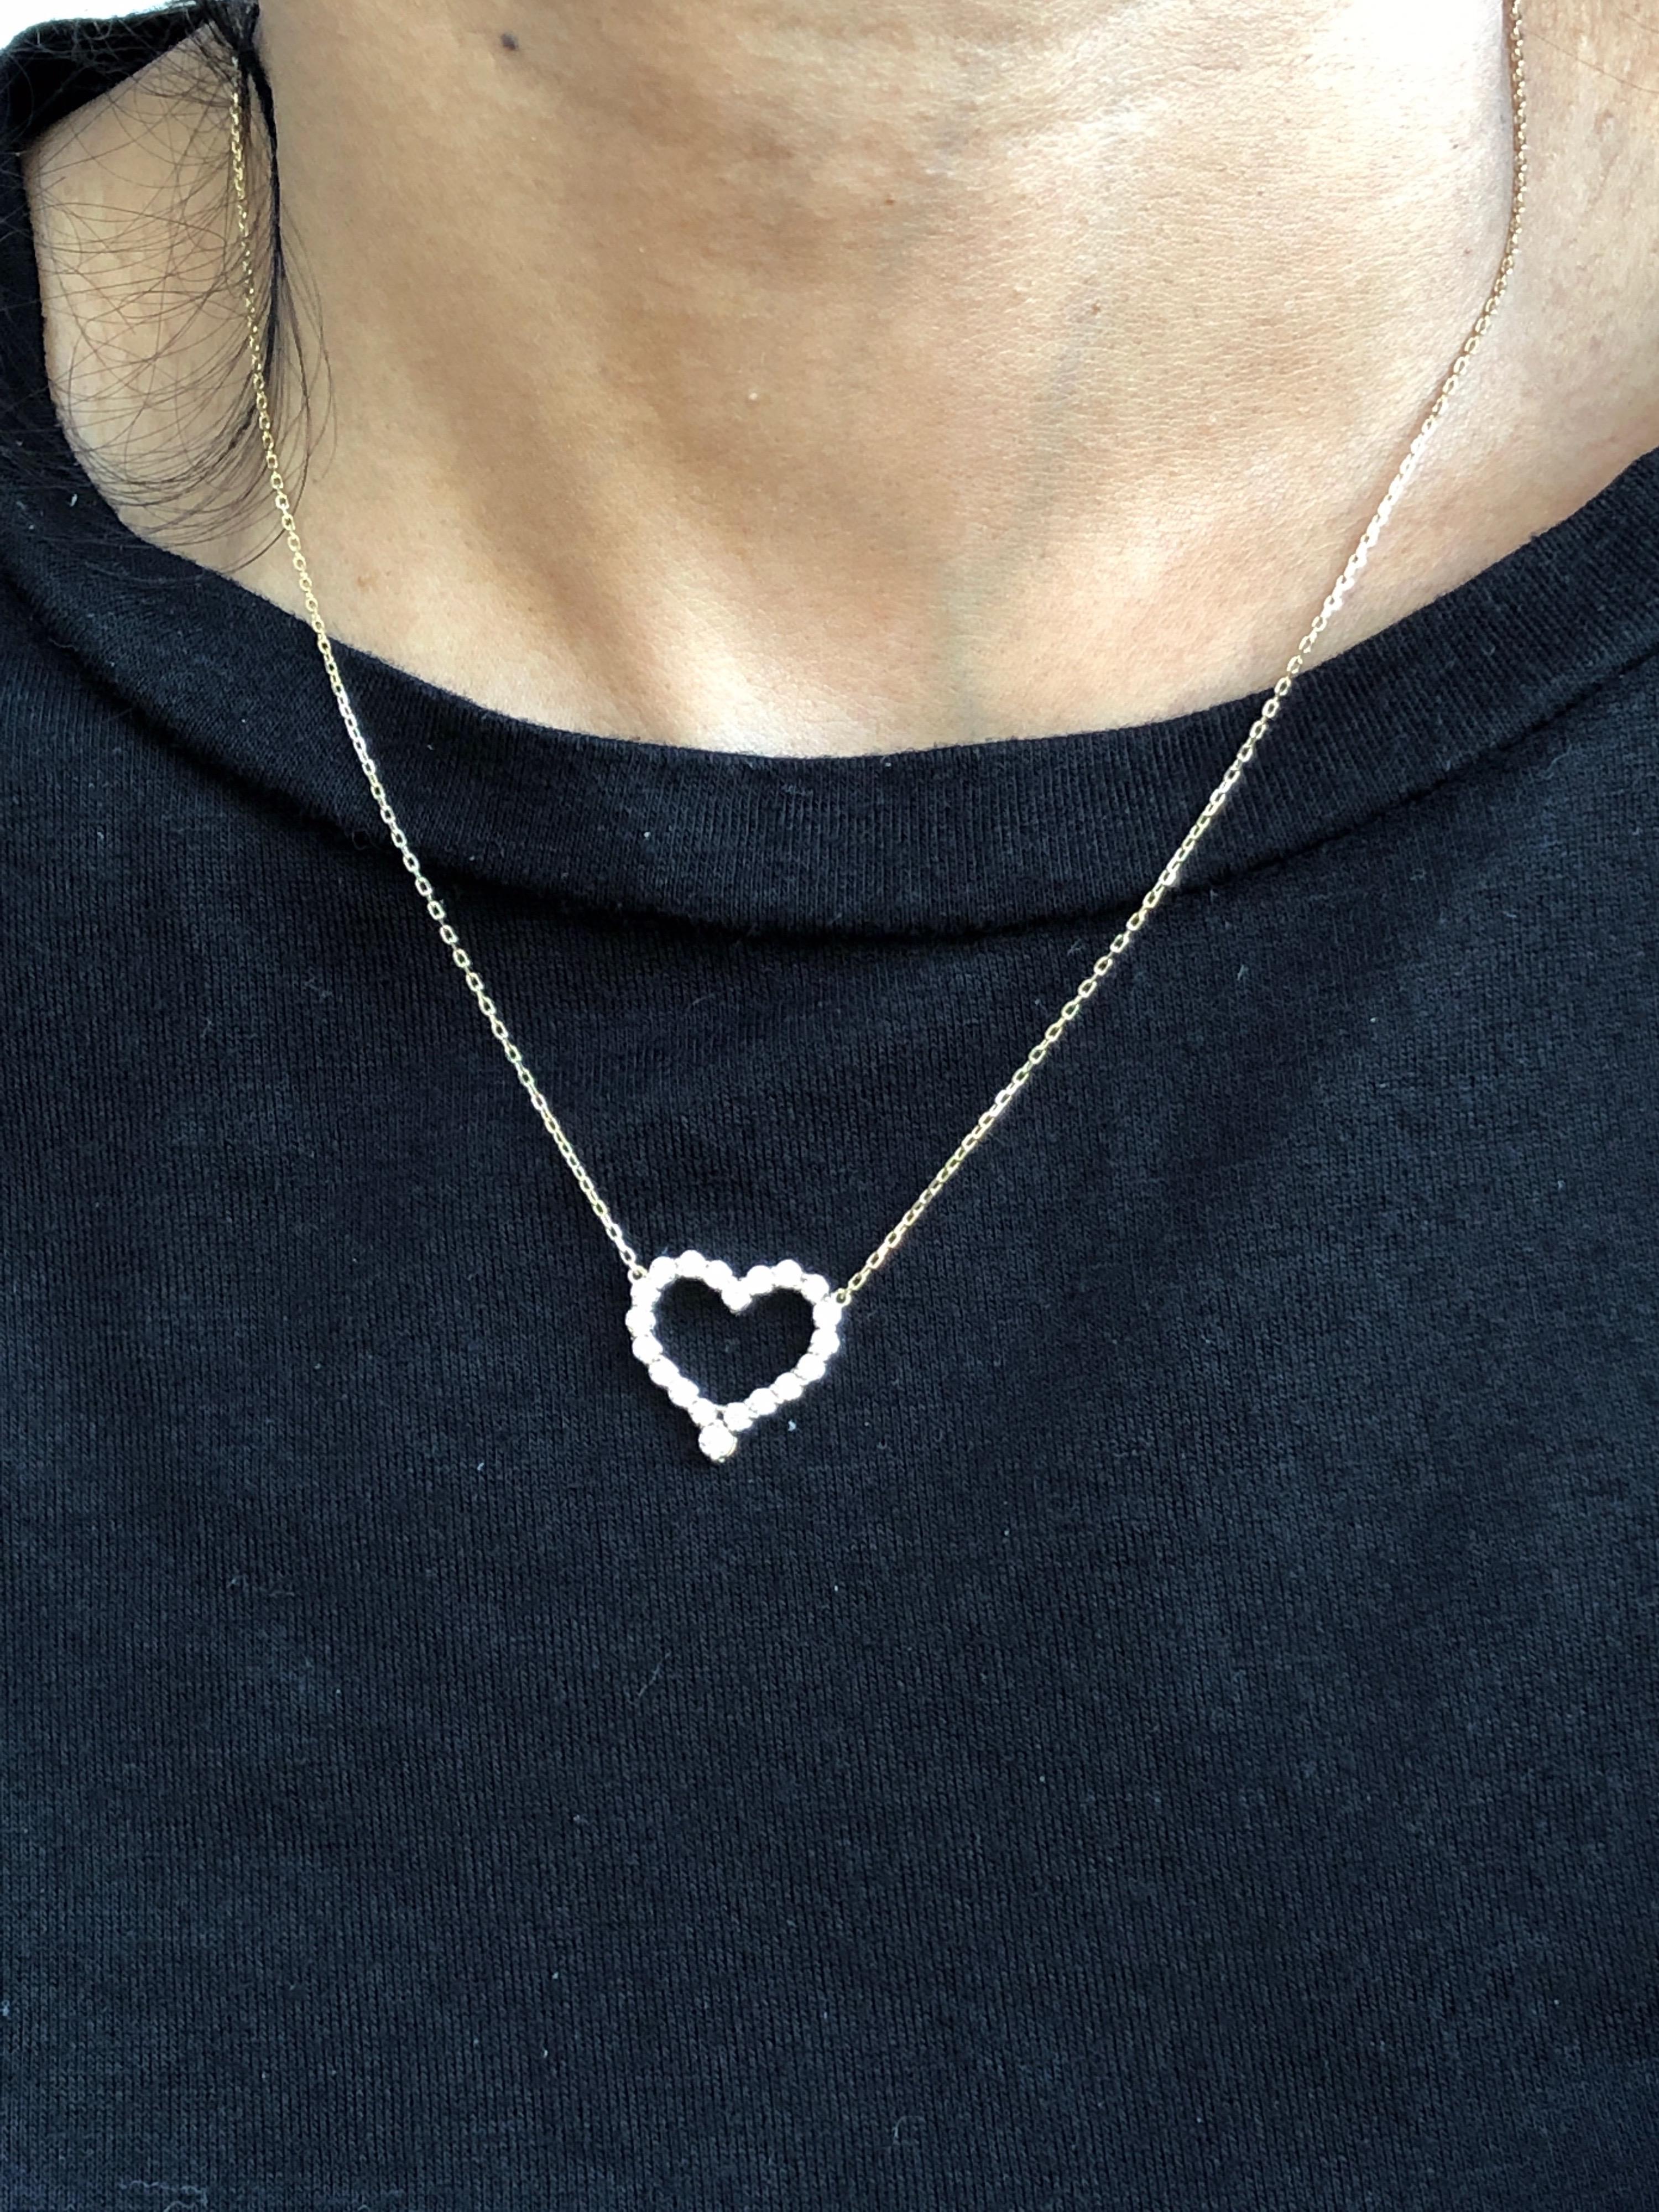 Round Cut Diamond Heart Pendant 14 Karat Yellow Gold Chain Necklace For Sale